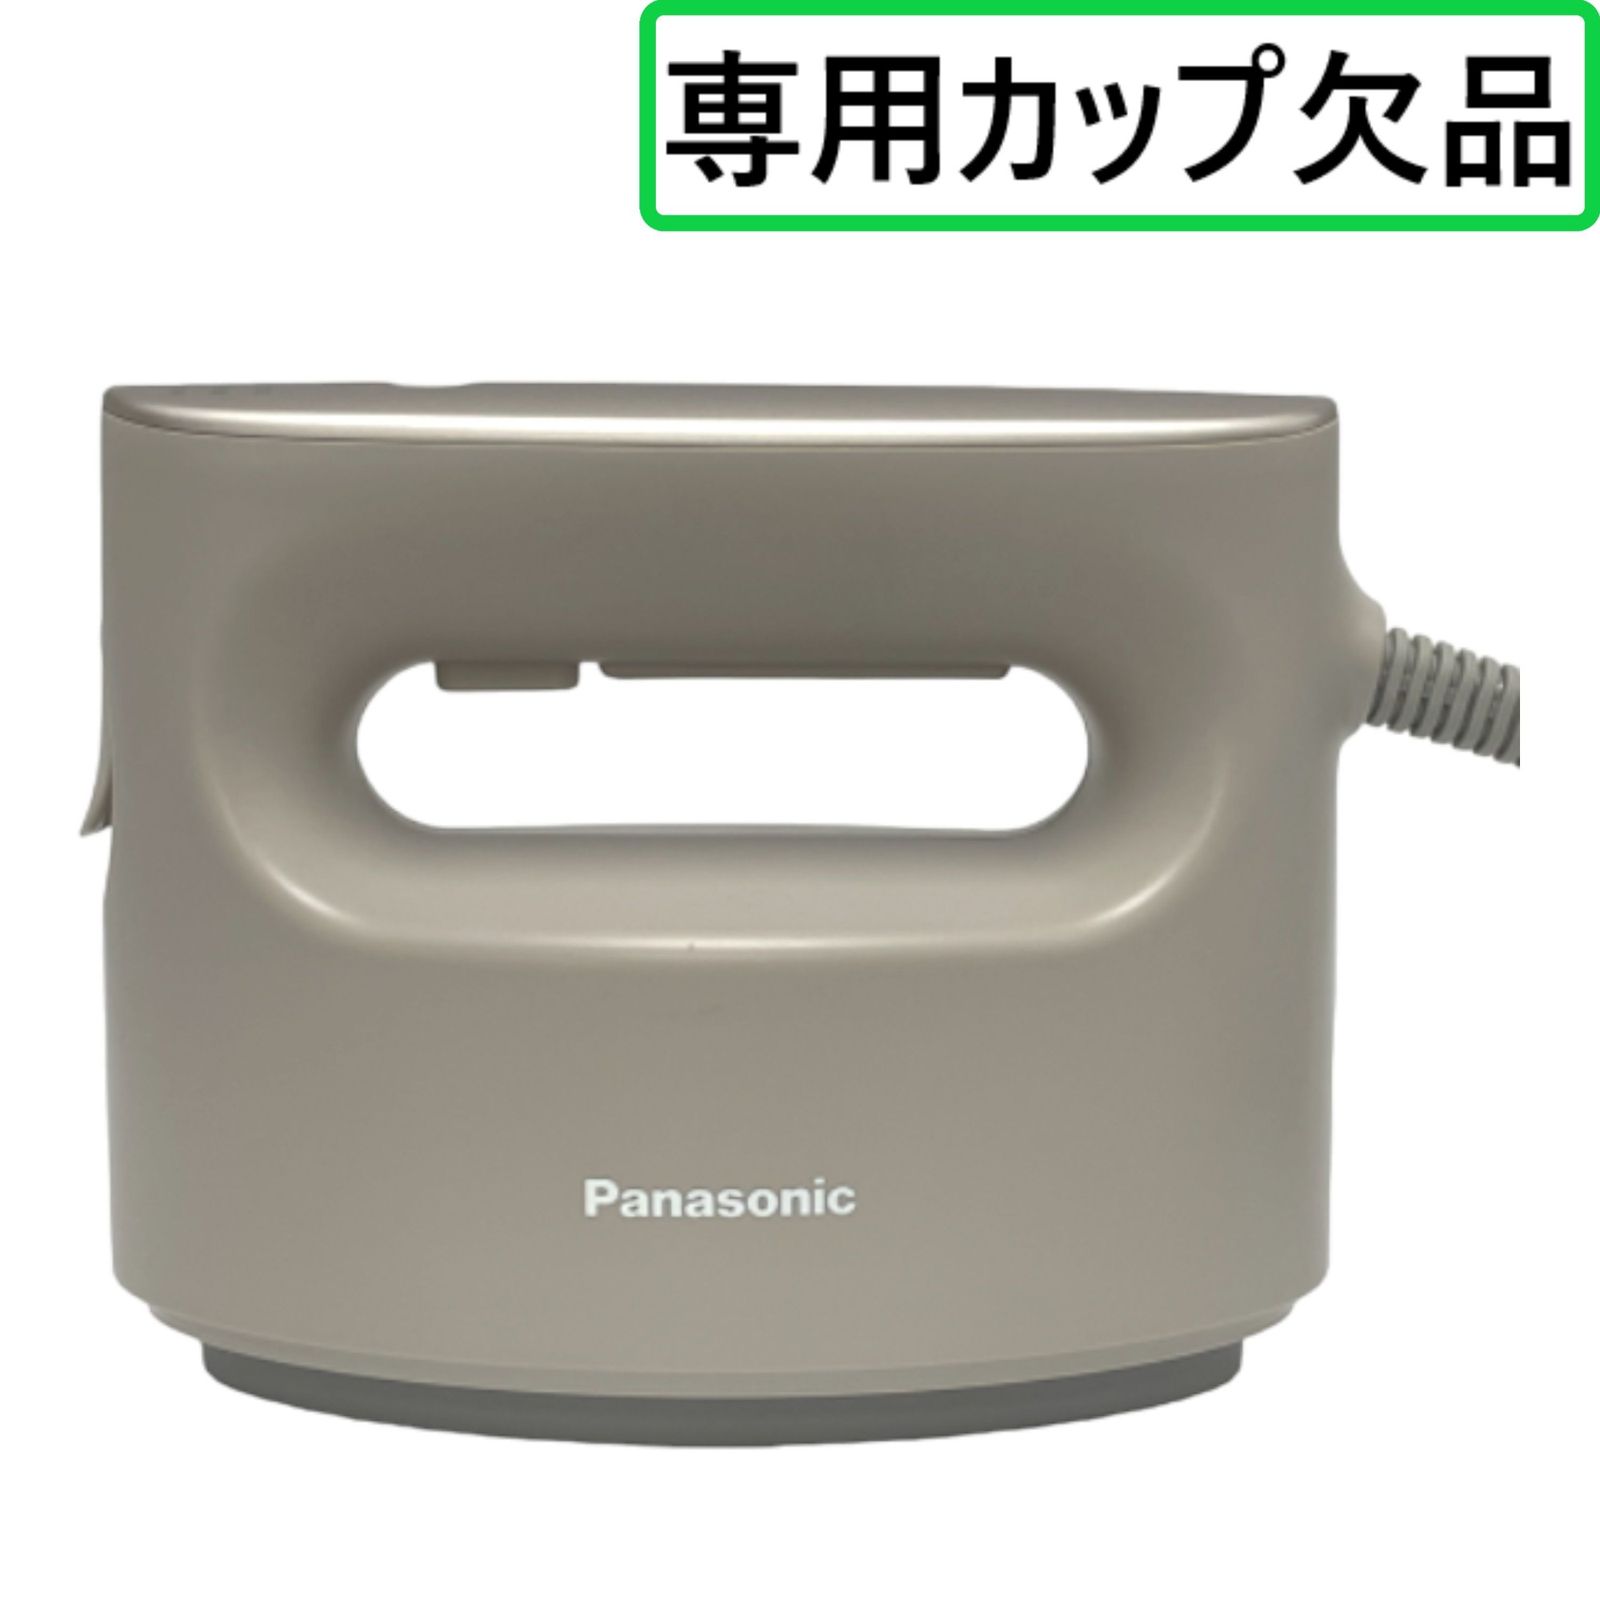 Panasonic NI-FS790 ベージュ 衣類スチーマー - 衣類ケア家電